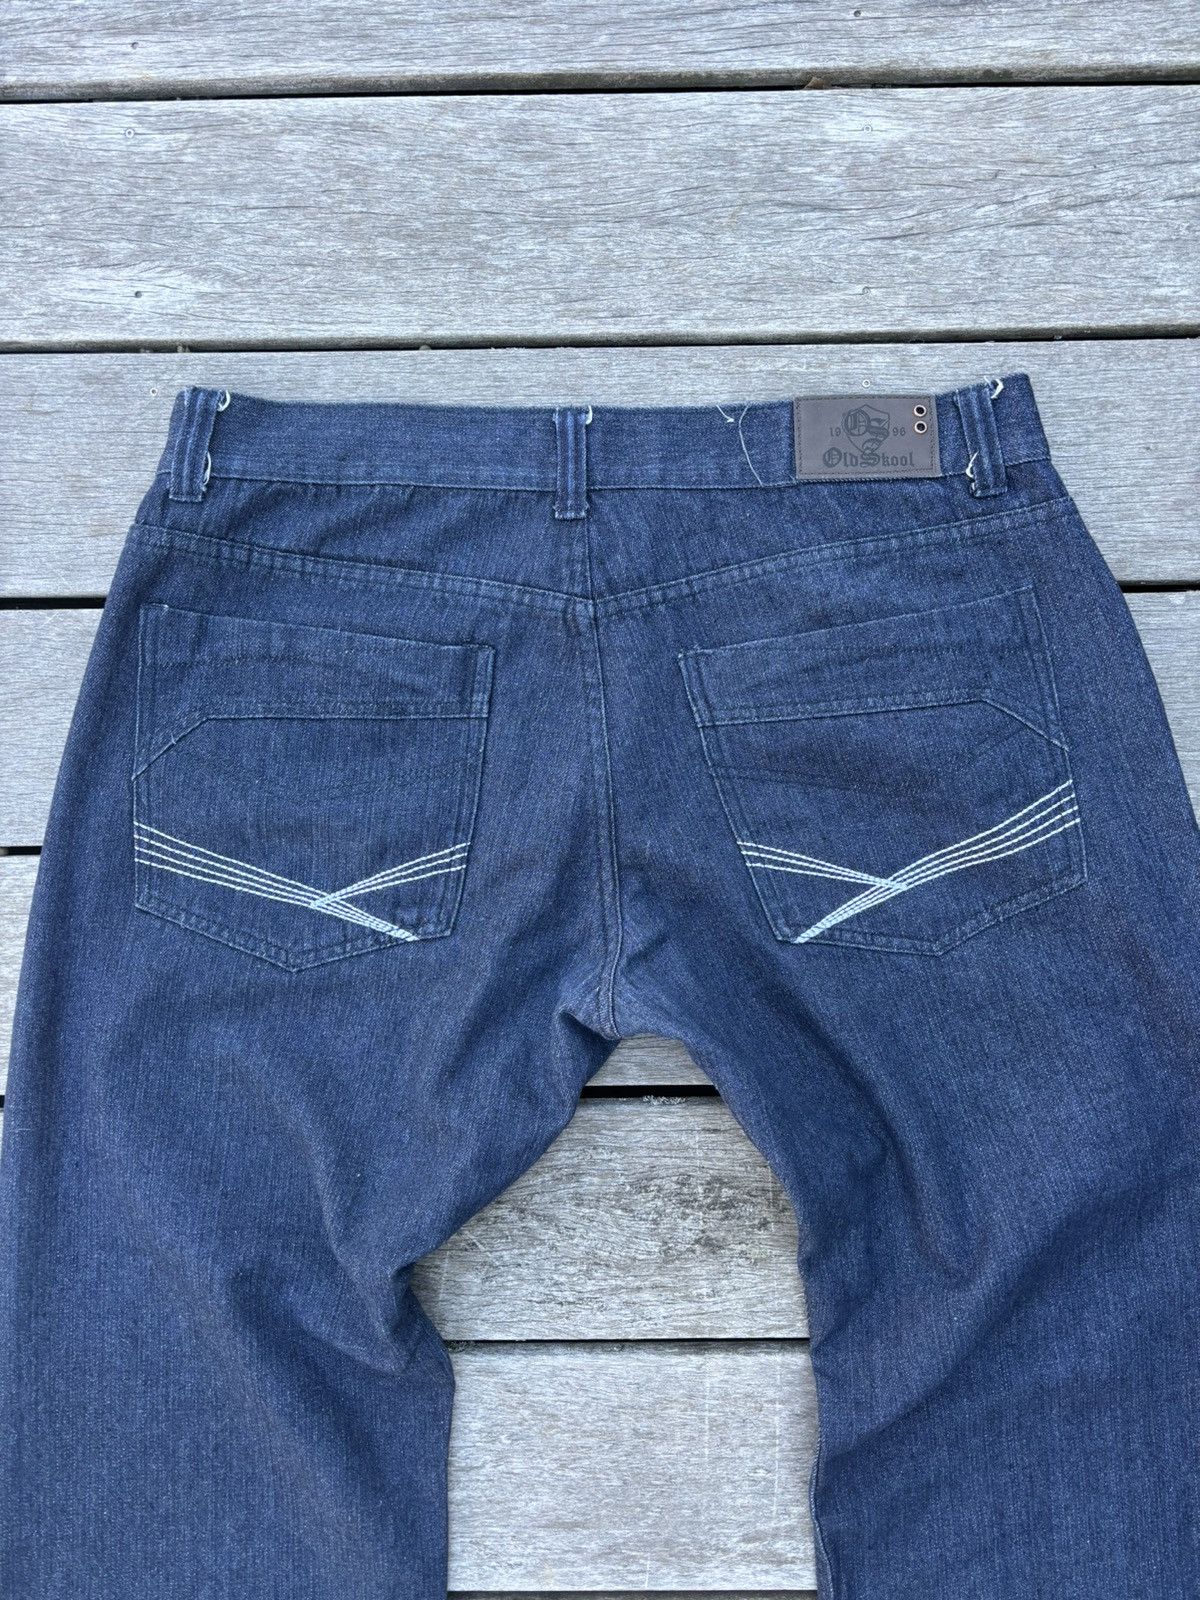 Vintage Vintage Old Skool Baggy Denim Jeans Size US 40 / EU 56 - 7 Thumbnail